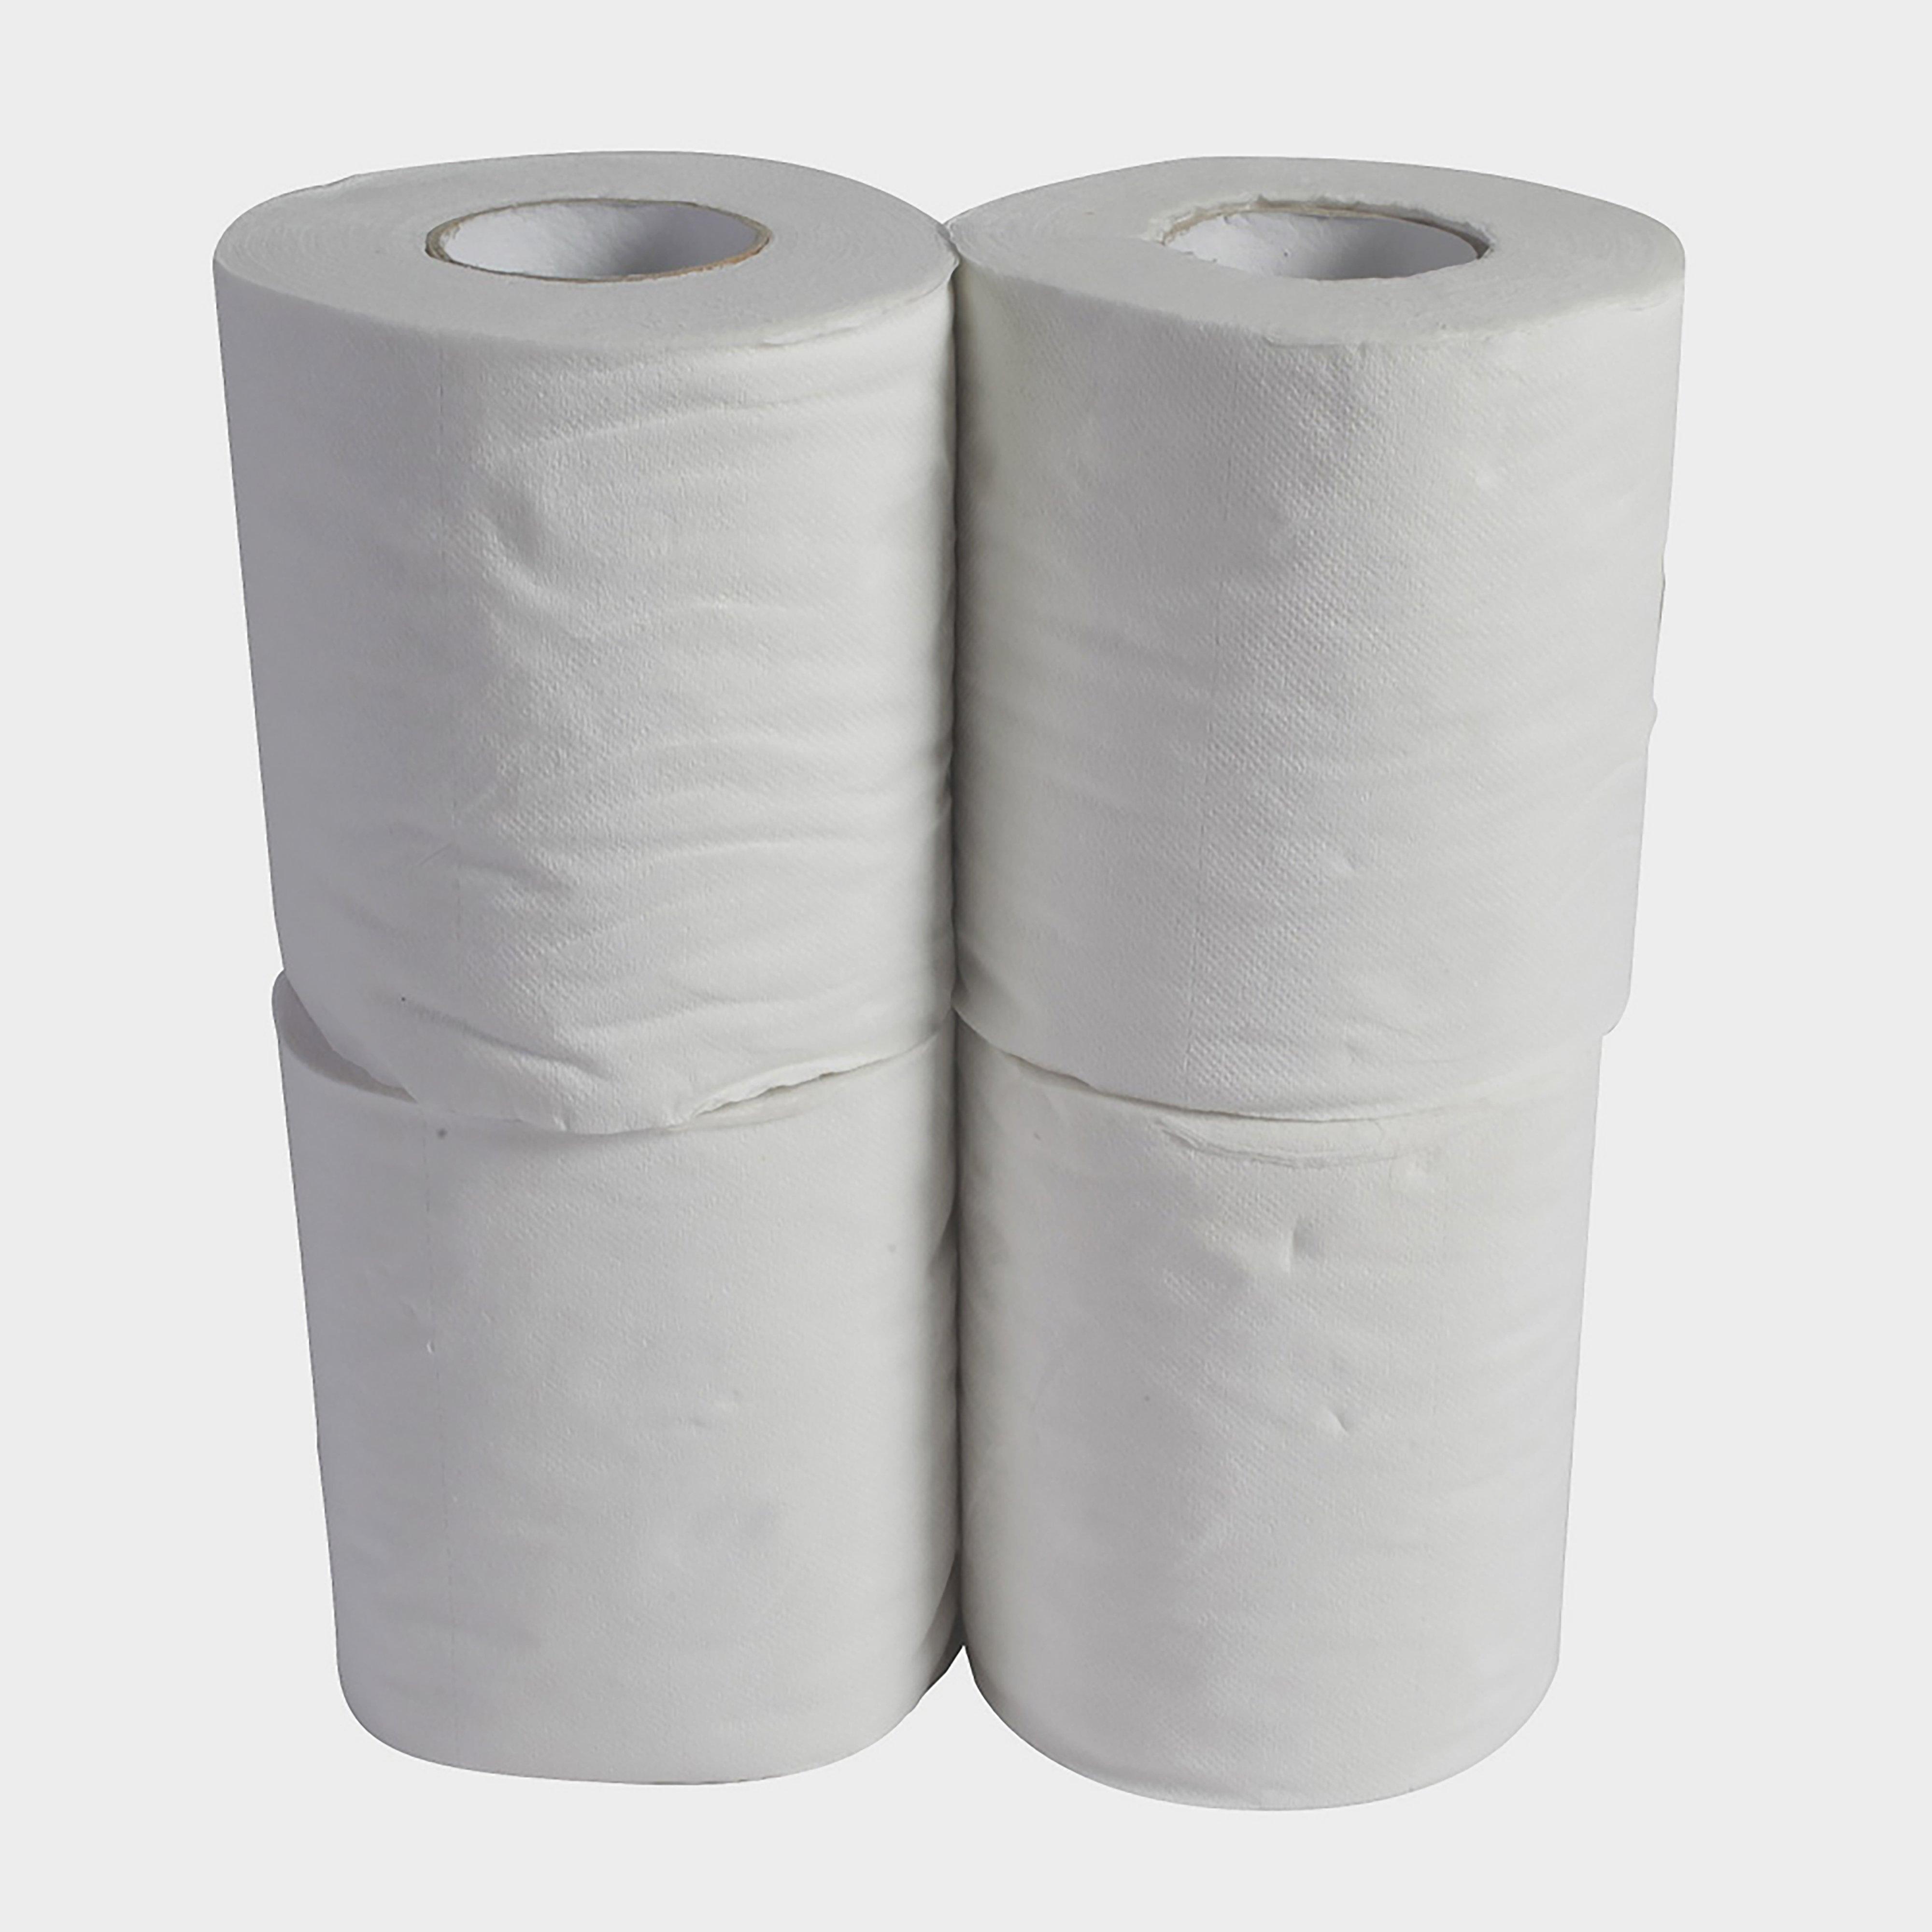 Biodegradable Toilet Roll (4 Pack), White